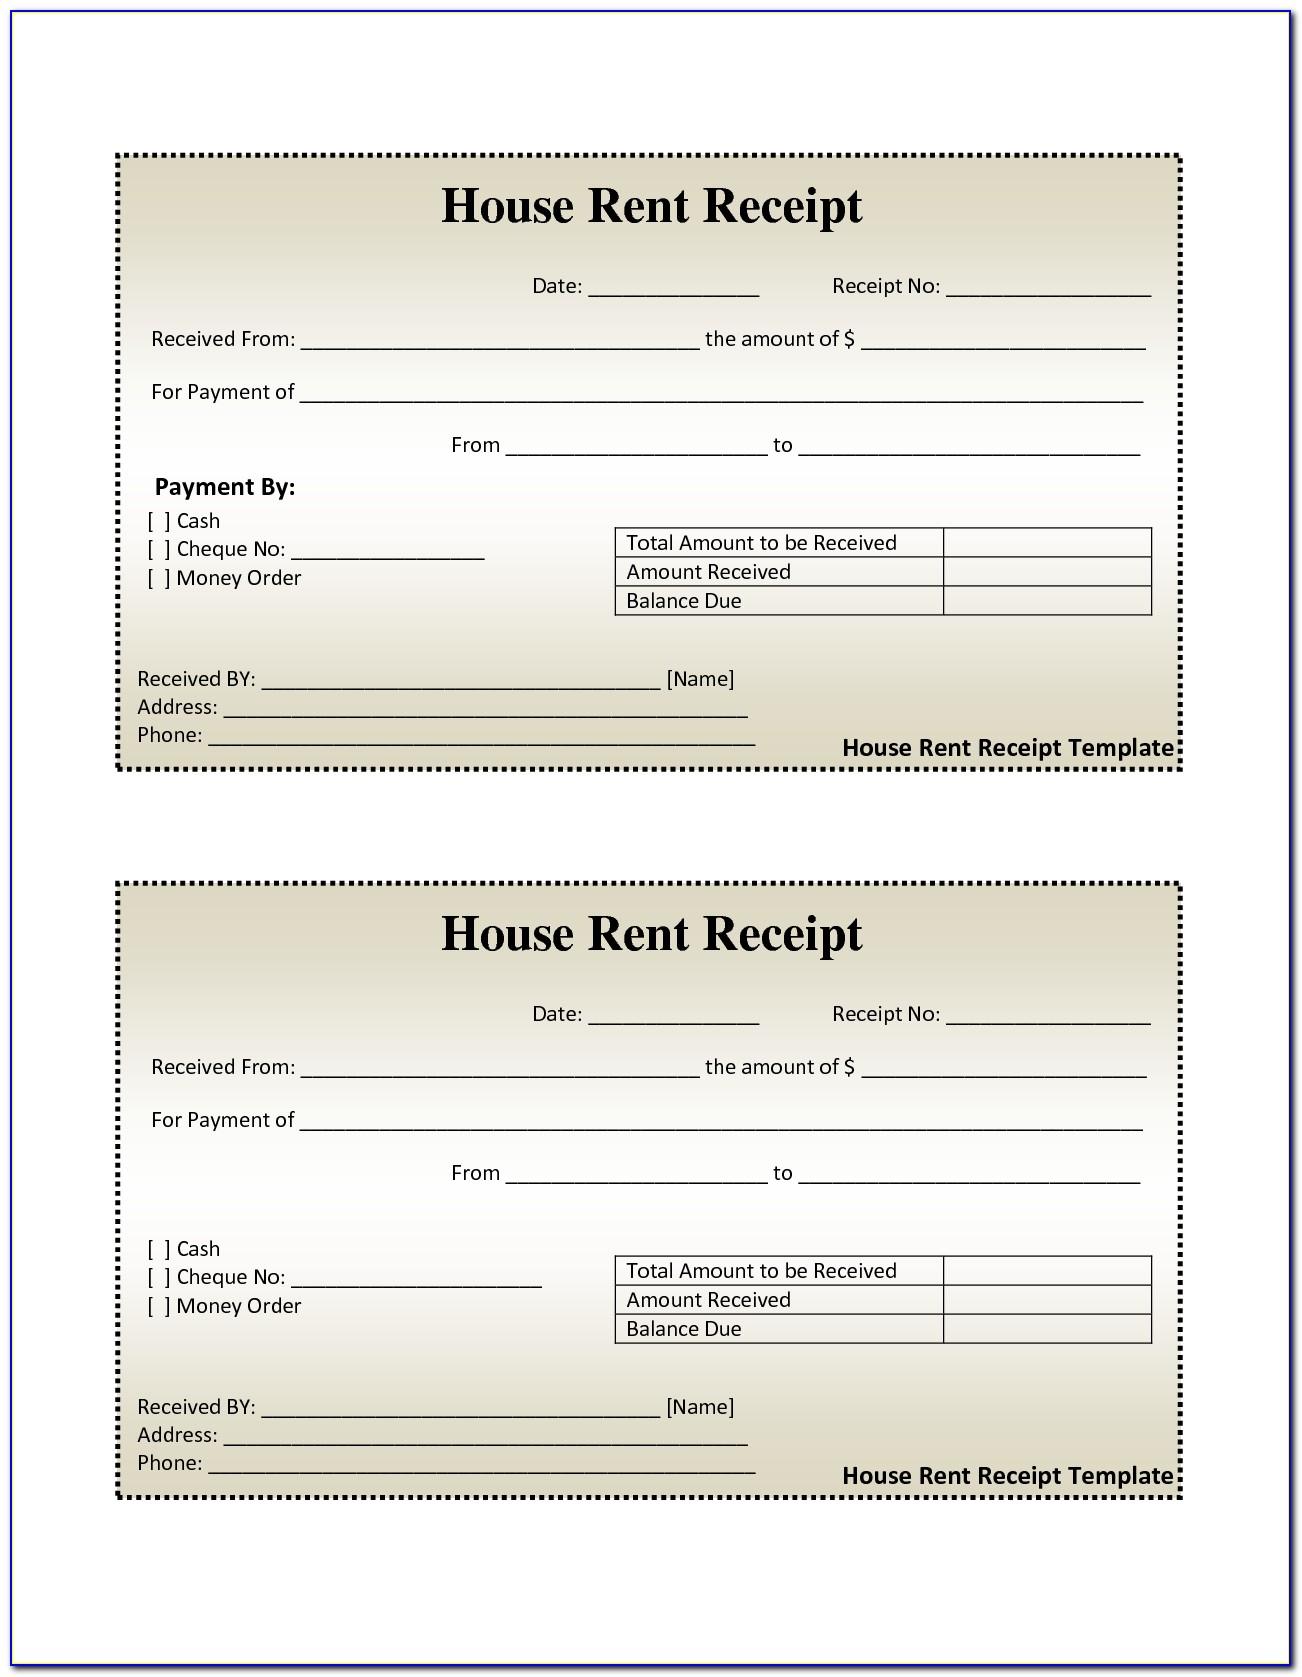 free-rent-receipt-template-excel-of-5-rent-receipt-templates-word-excel-templates